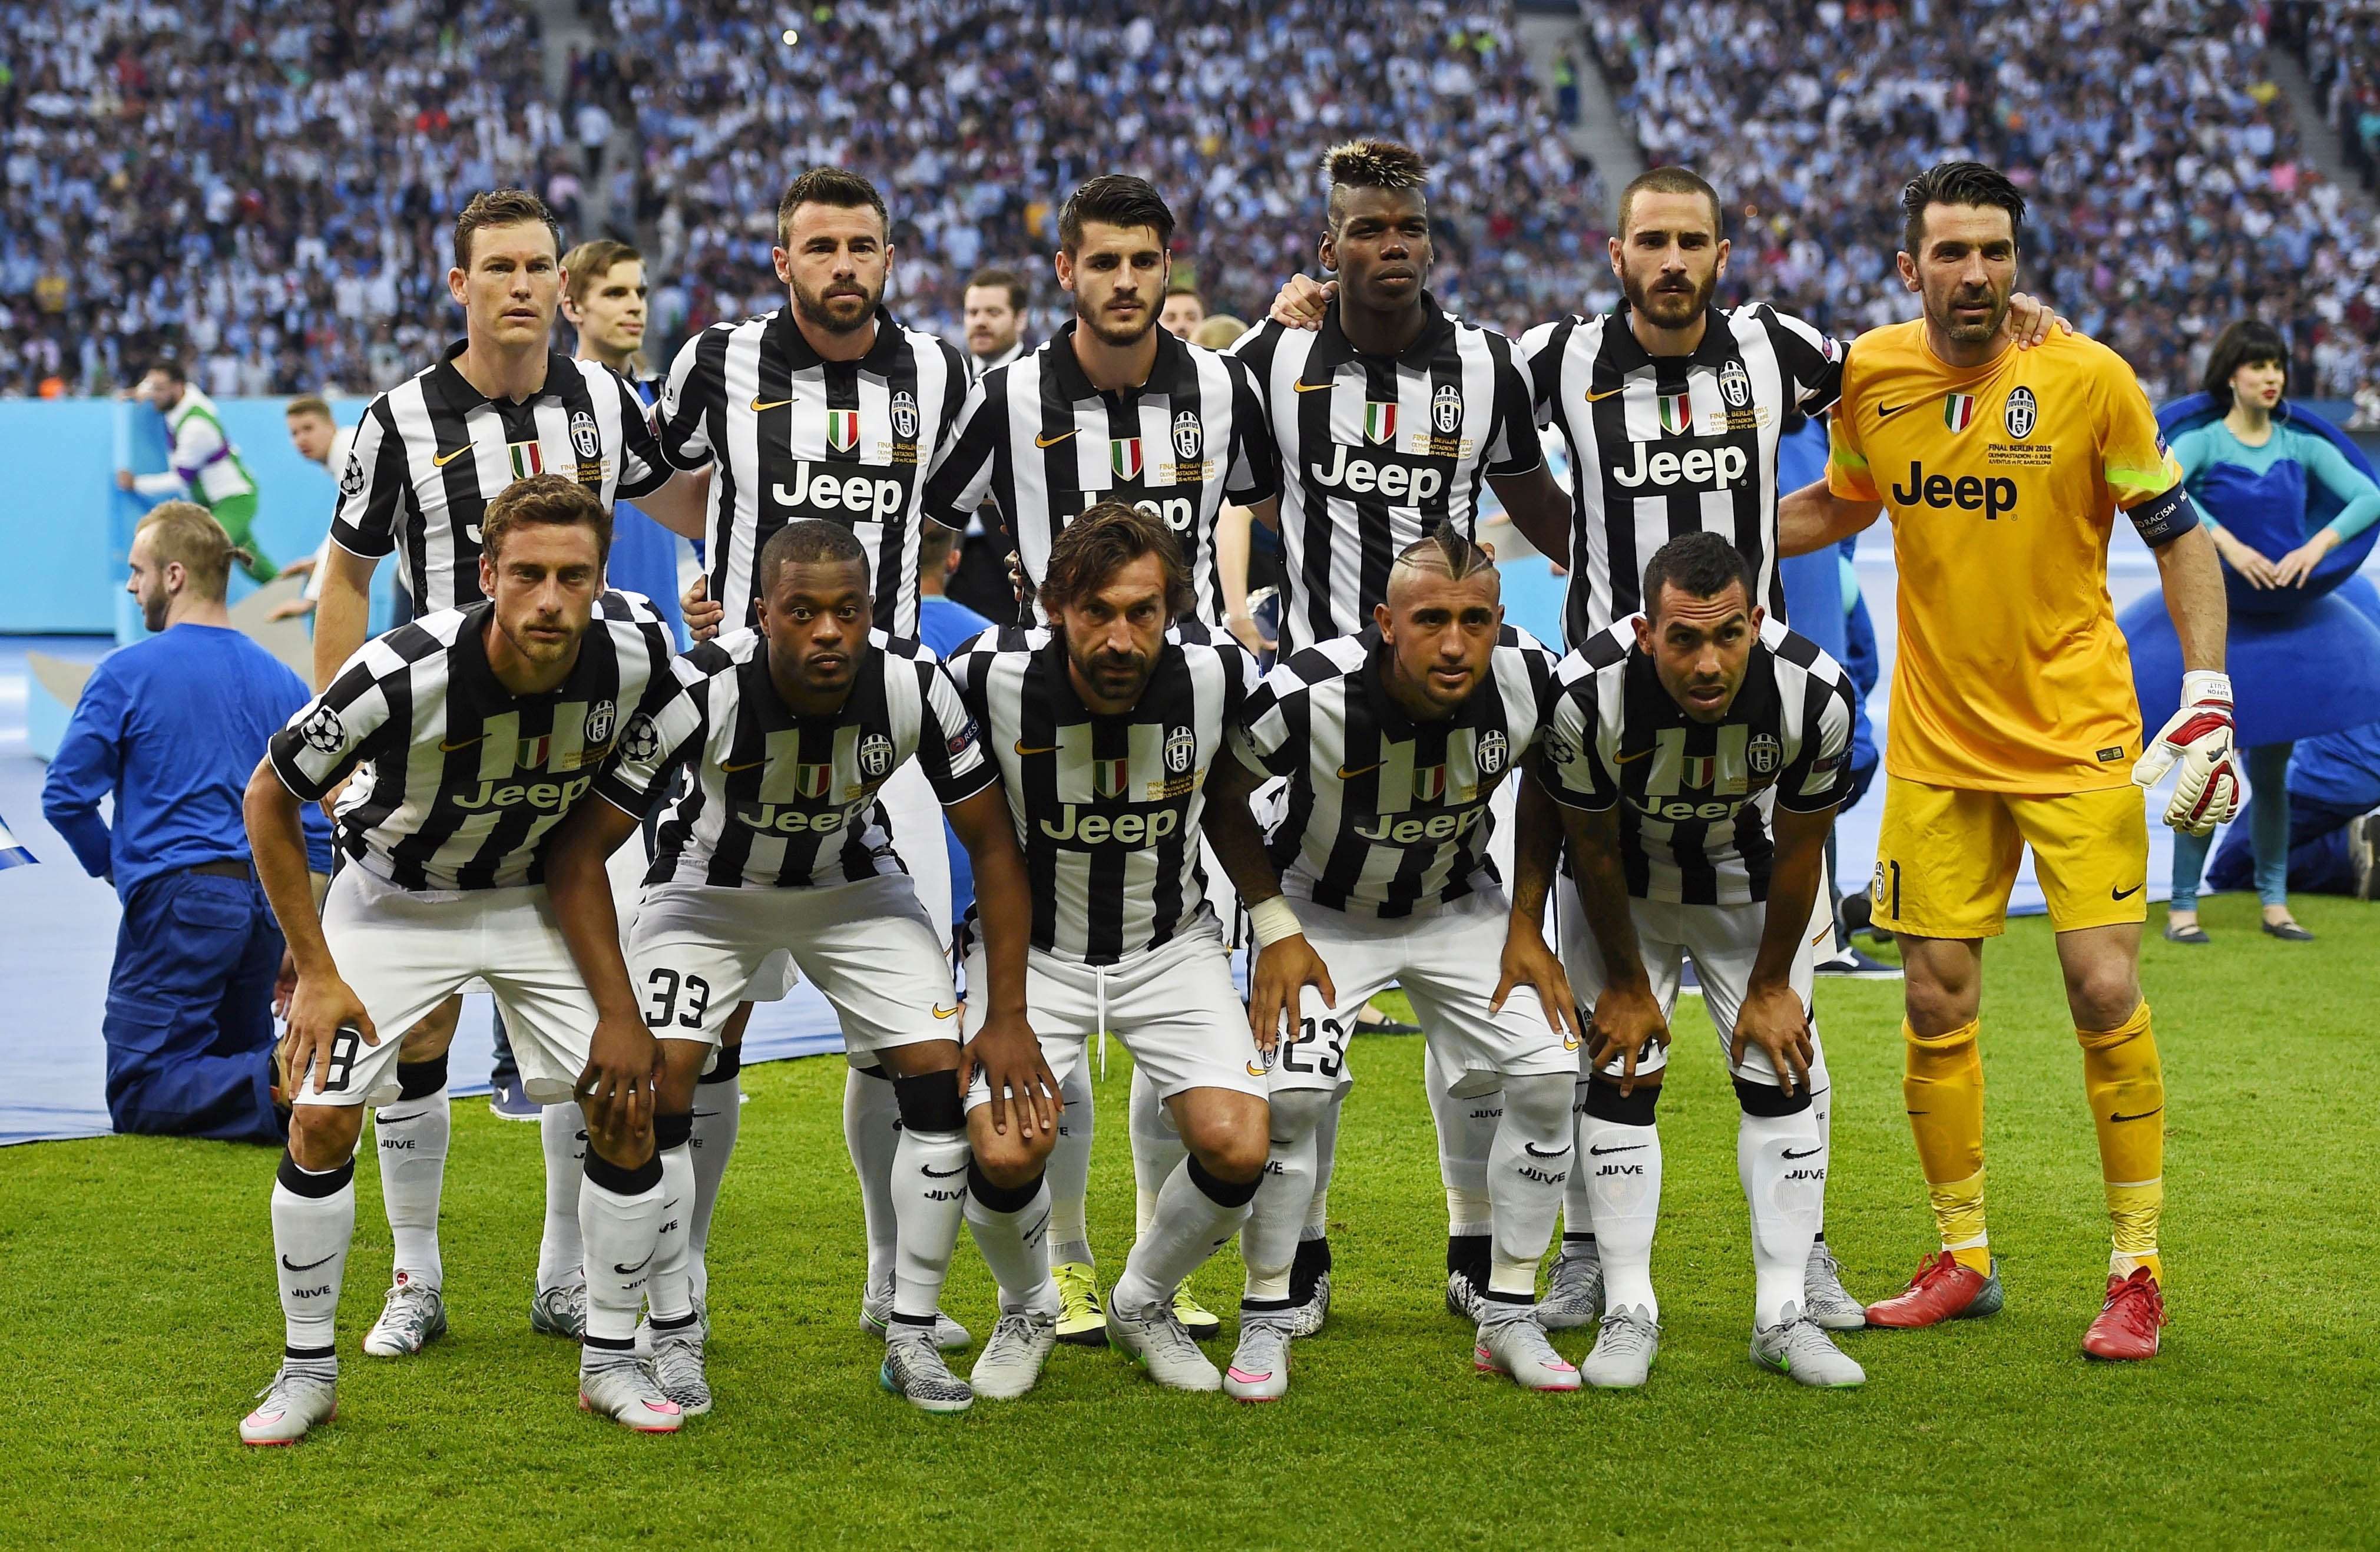 Juventus launch new mobile app for new season - Digital Sport